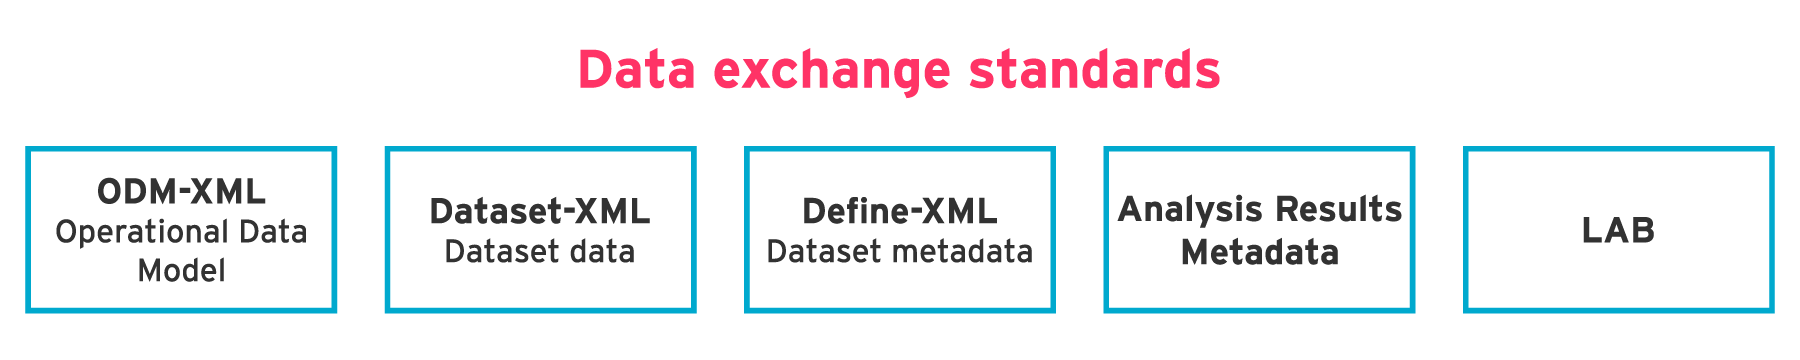 Data-exchange-standards-updated (1)